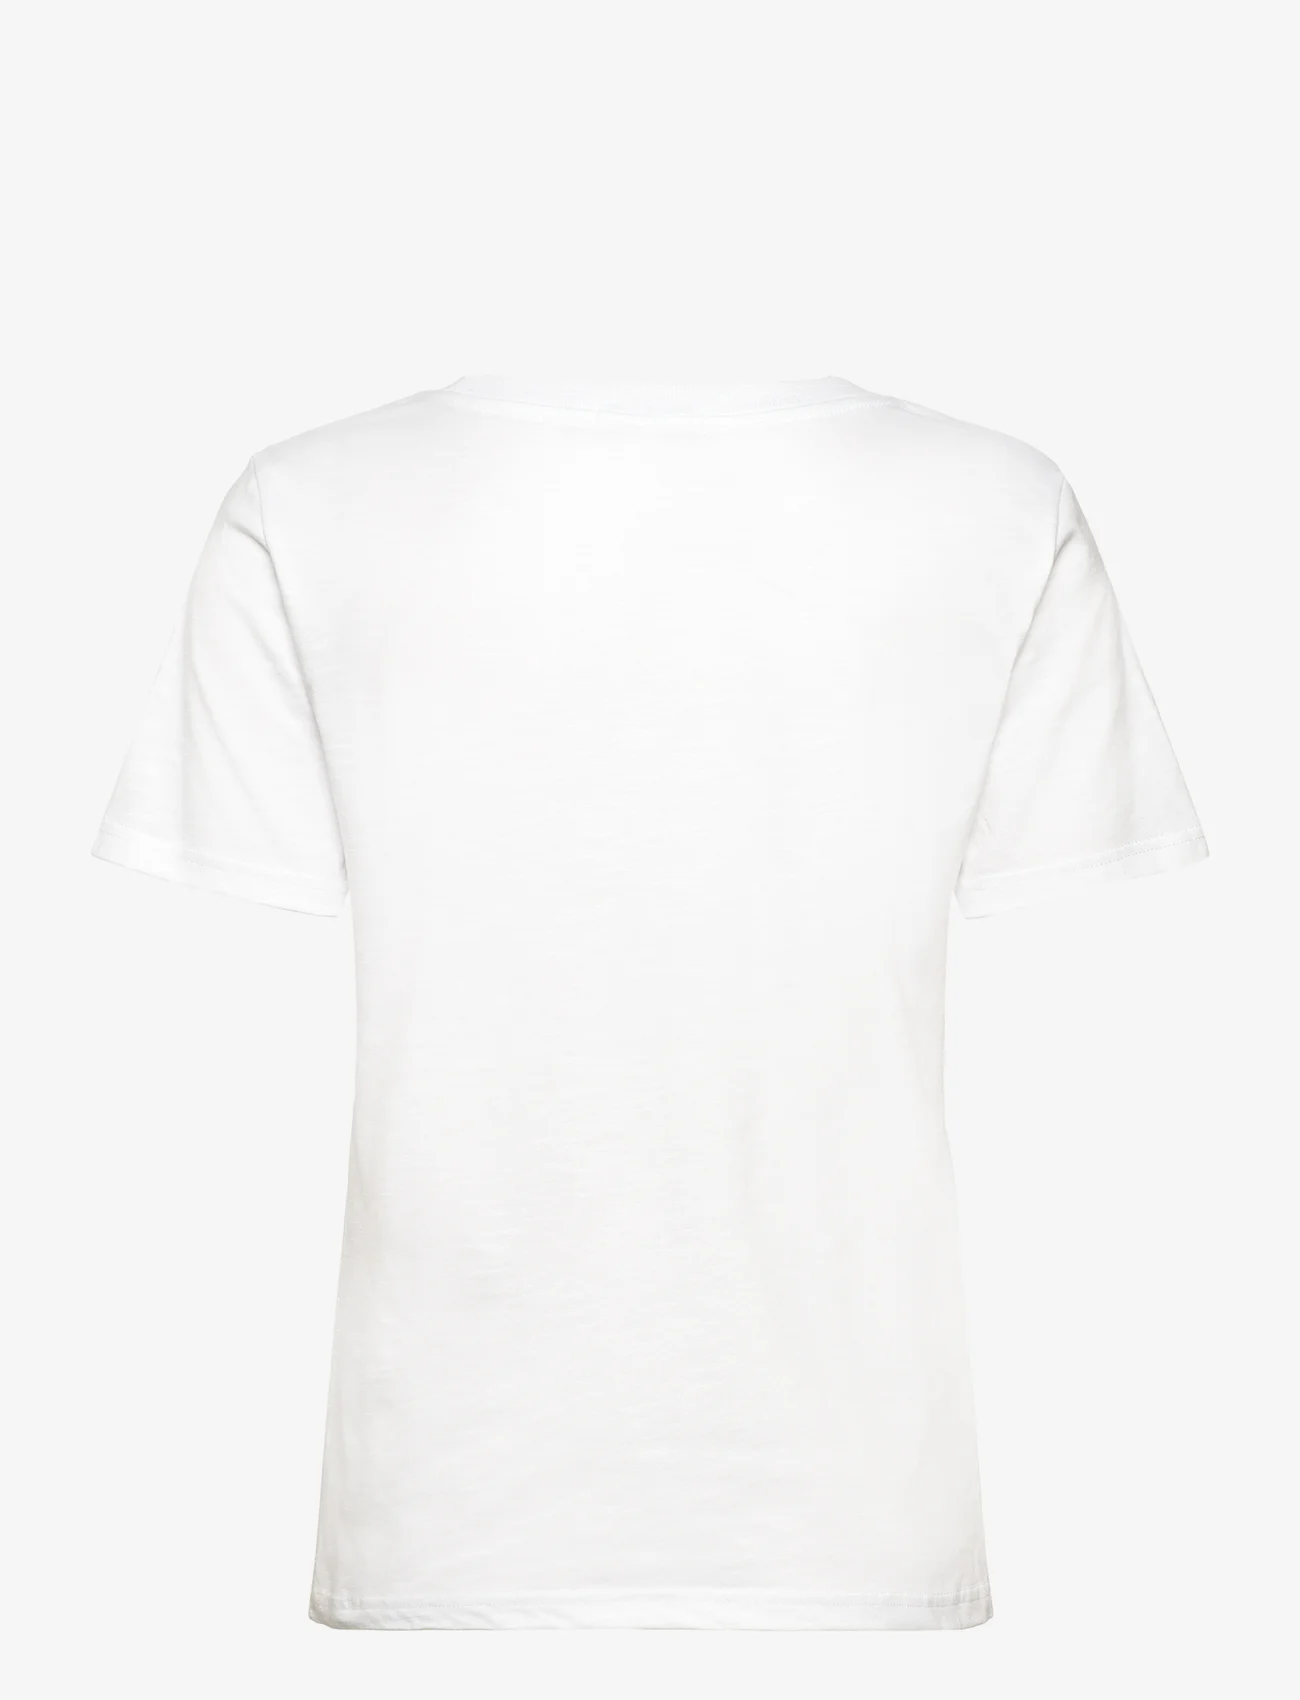 Coster Copenhagen - T-shirt with kissing lips - Mid sle - marškinėliai - white - 1